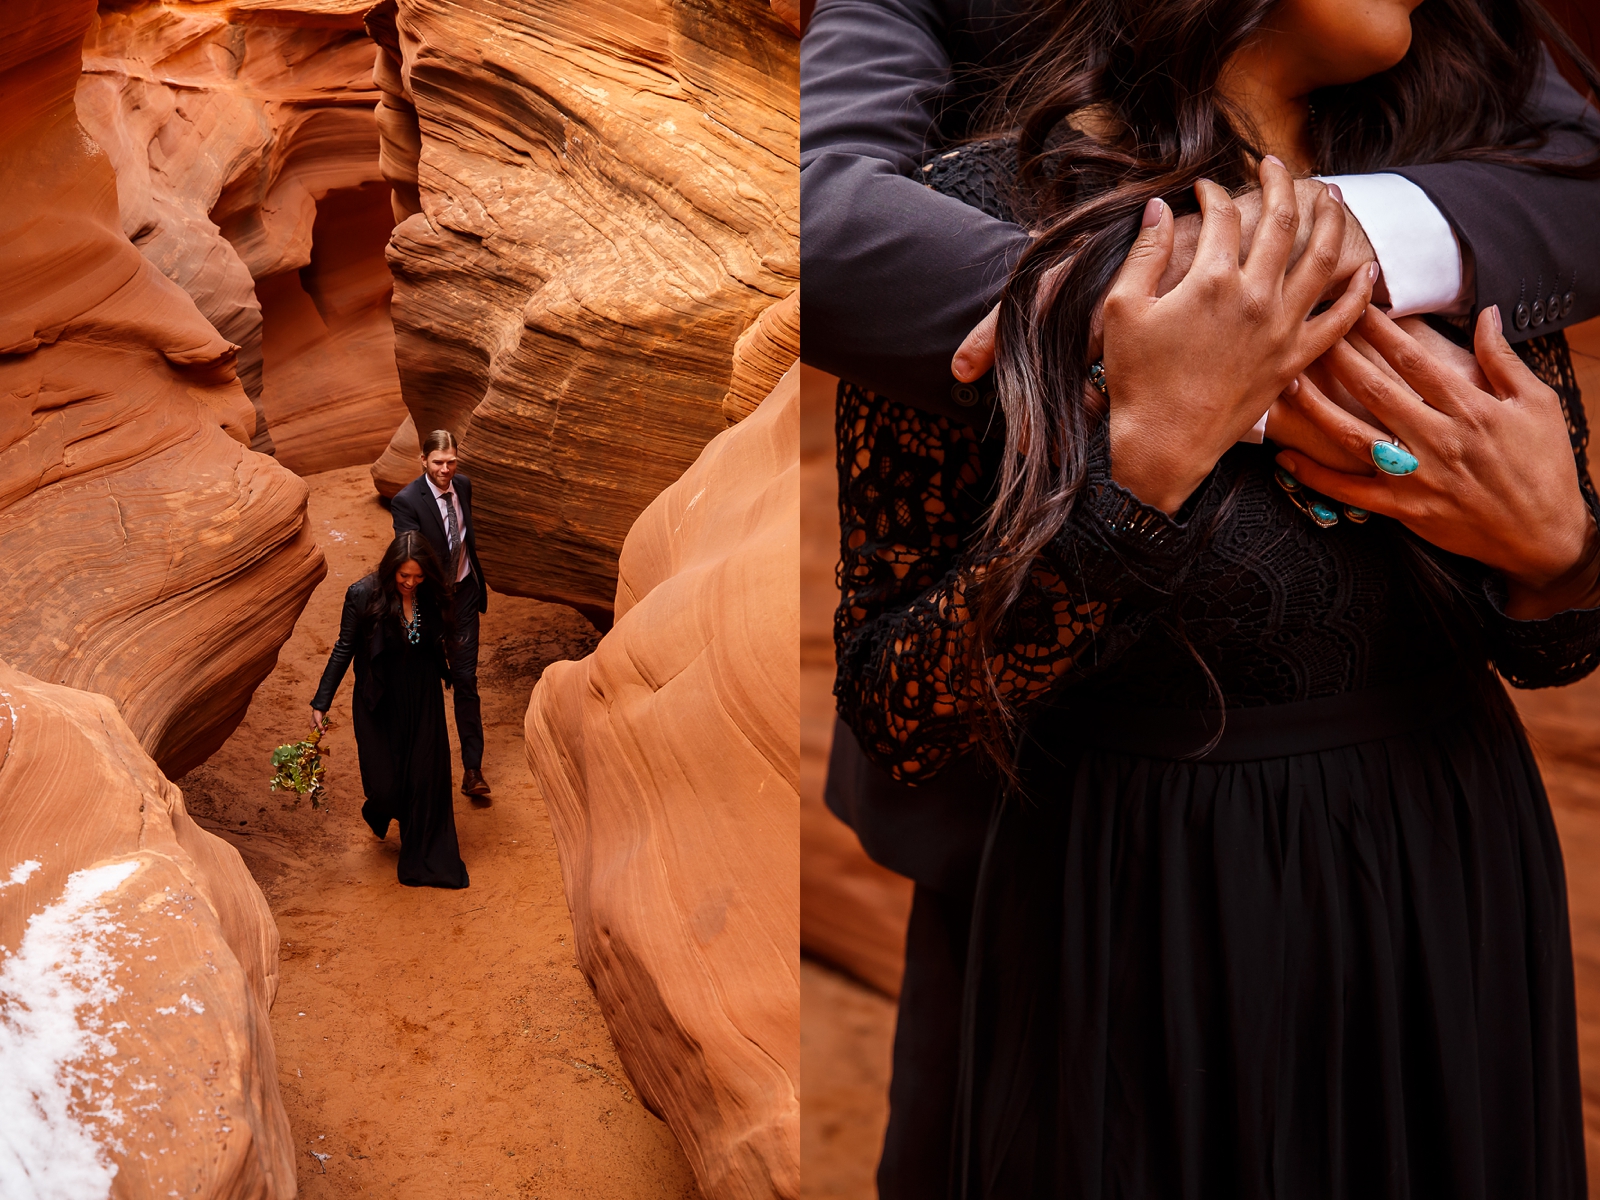 Couple exploring a slot canyon and cuddling